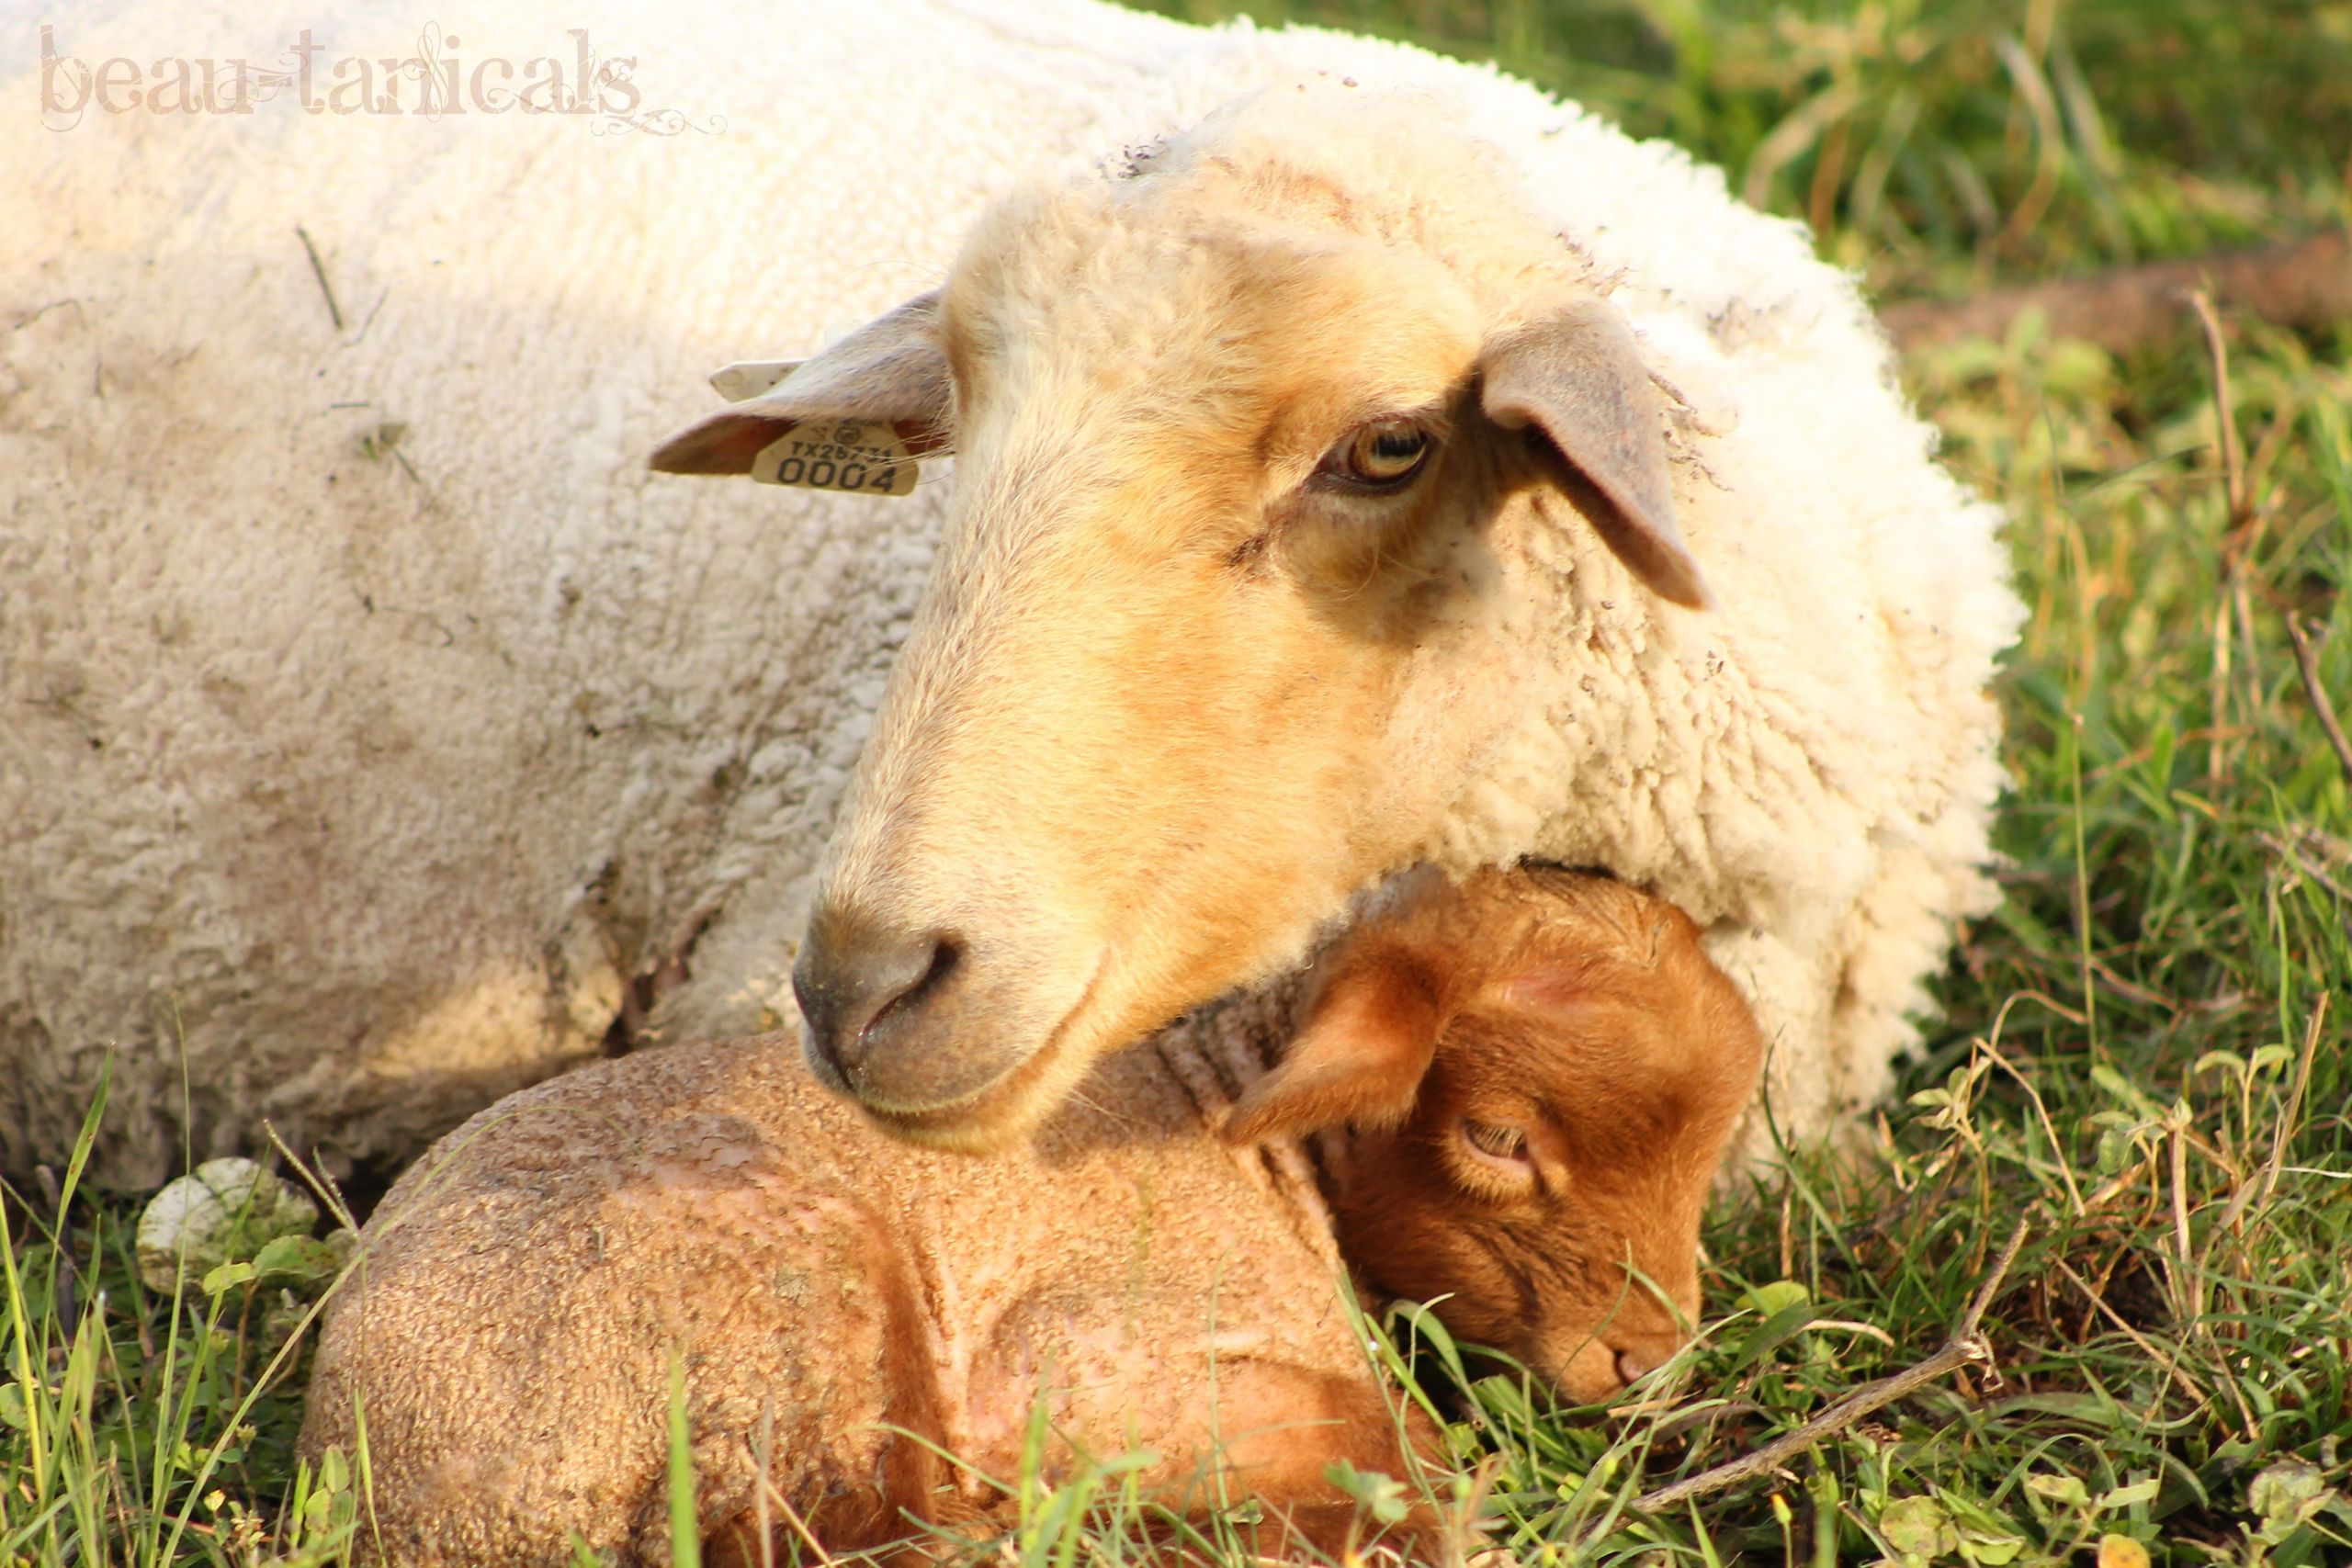 Farm Animals Sheep